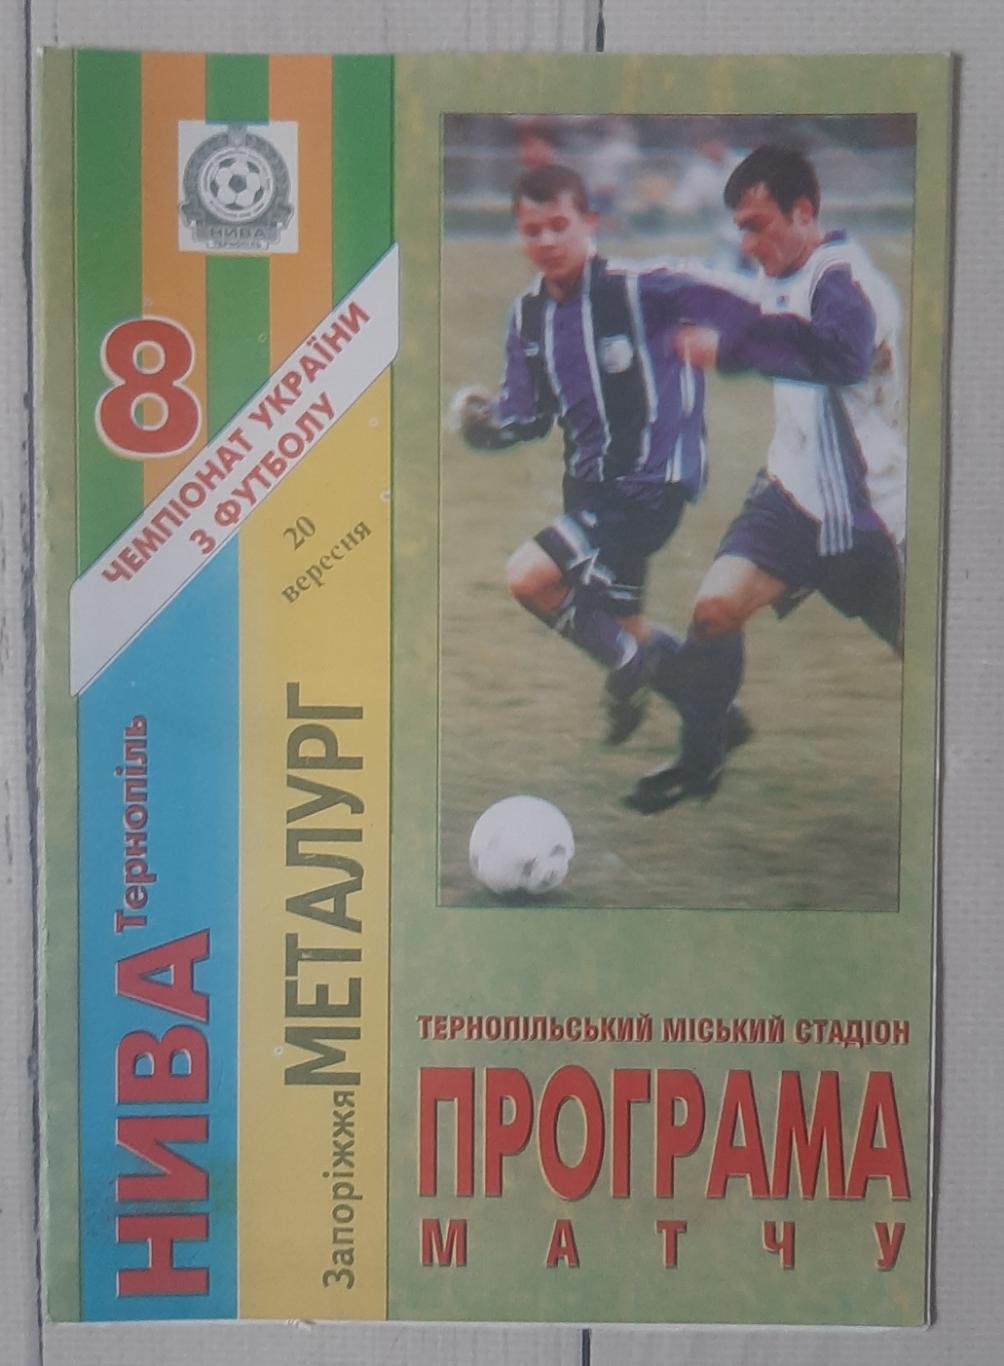 Нива Тернопіль - Металург Запоріжжя 20.09.1998.